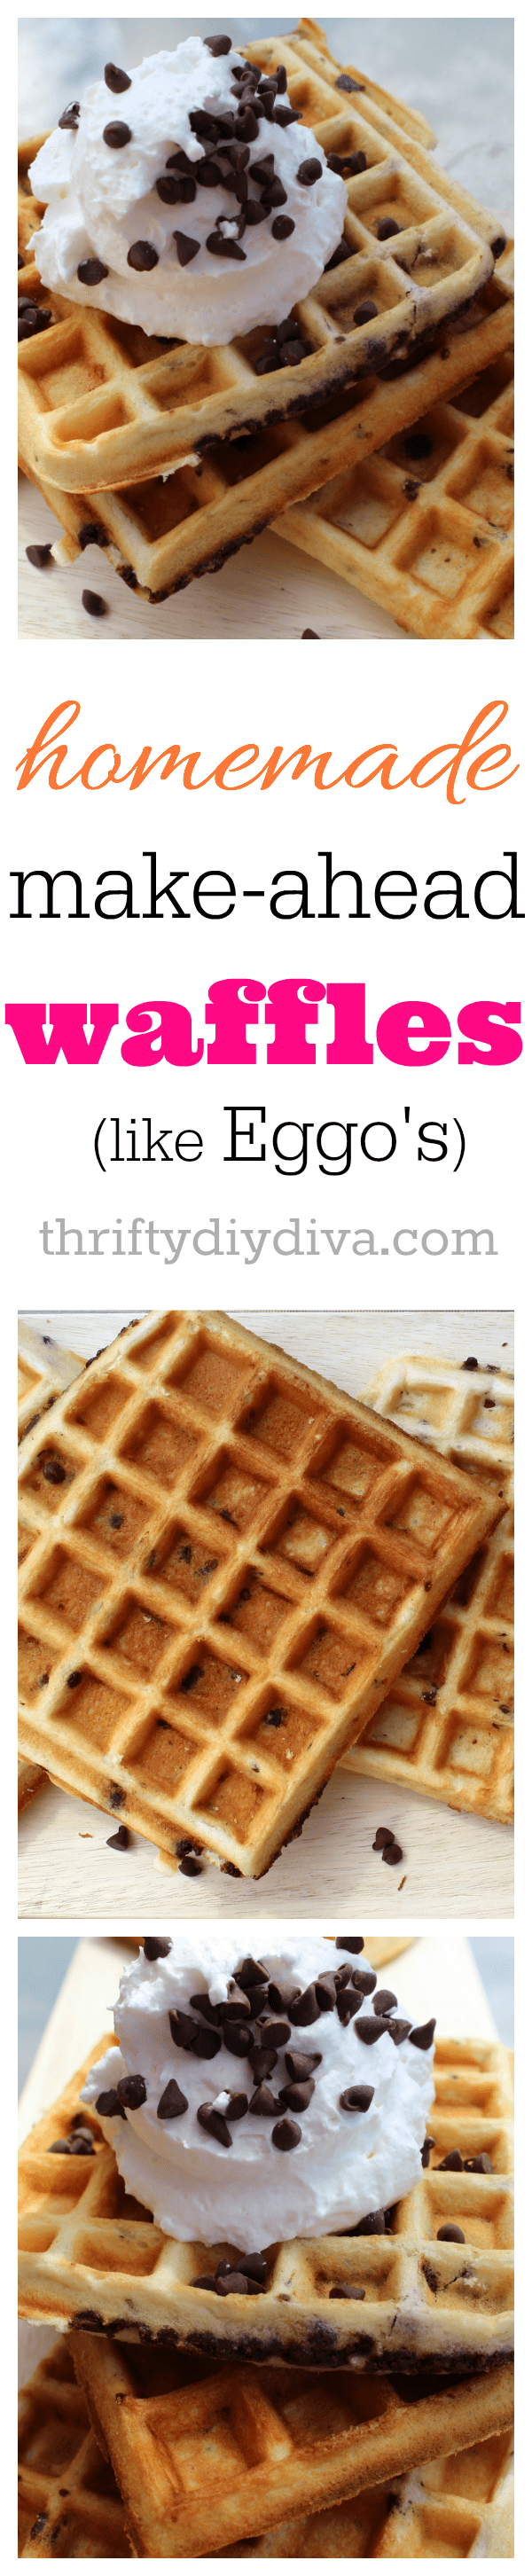 Homemade Copycat Eggo's Waffles